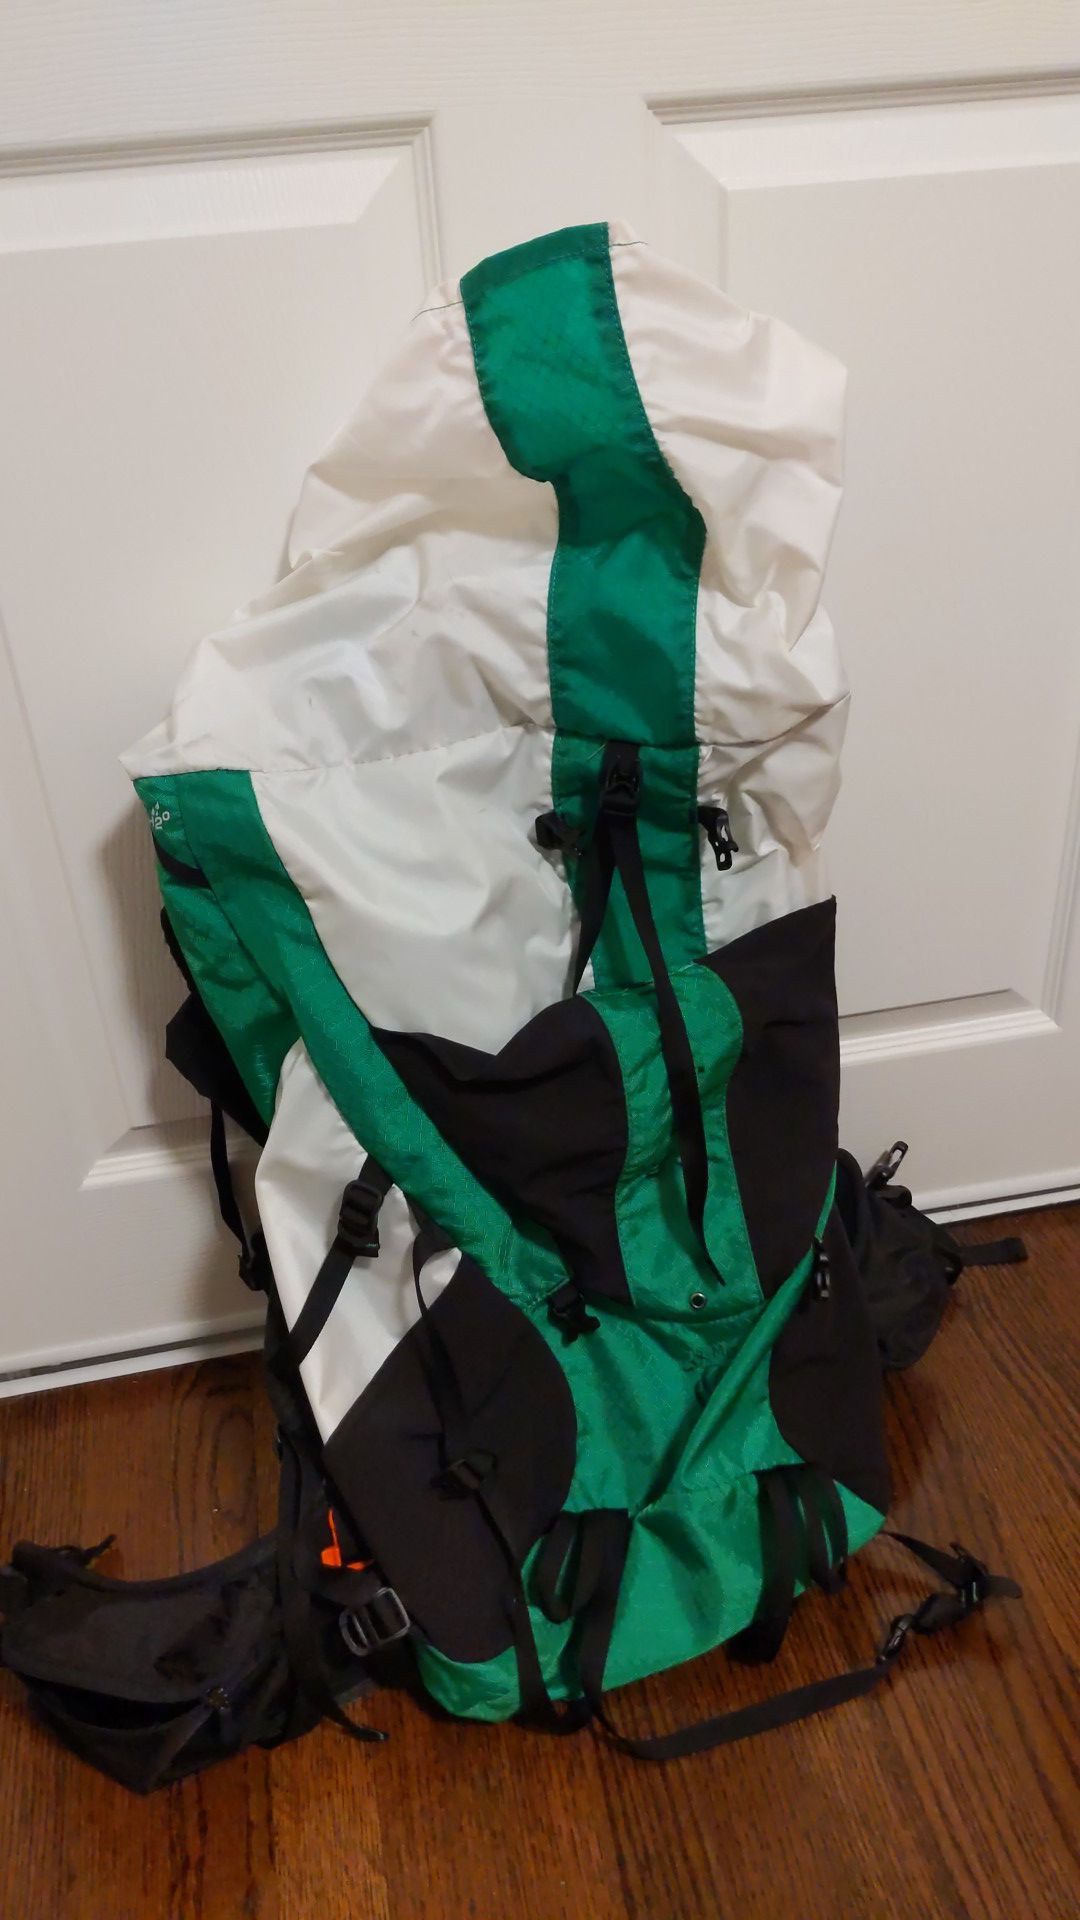 50L ultralight backpack - Six moon designs - small/medium